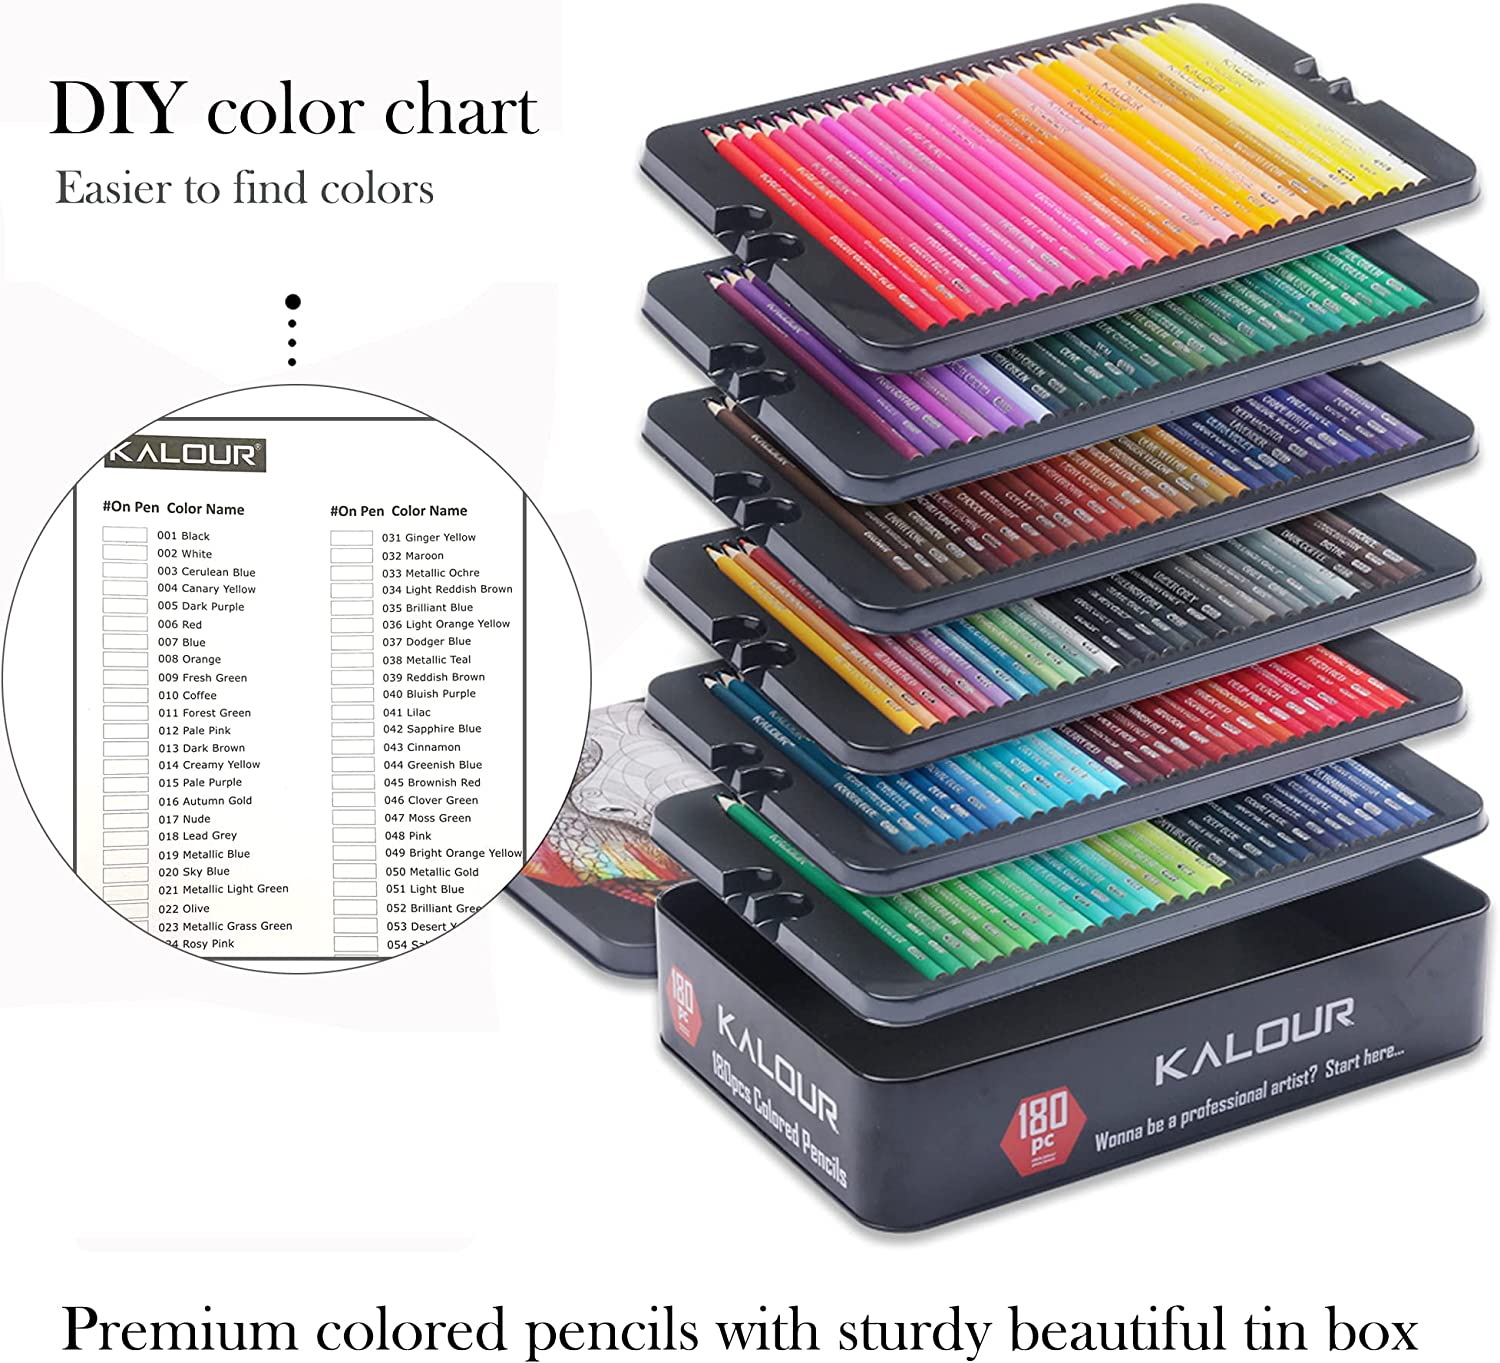 Kalour LARGE PRINT 300 Colored Pencil Set DIY Color Chart -  Hong Kong